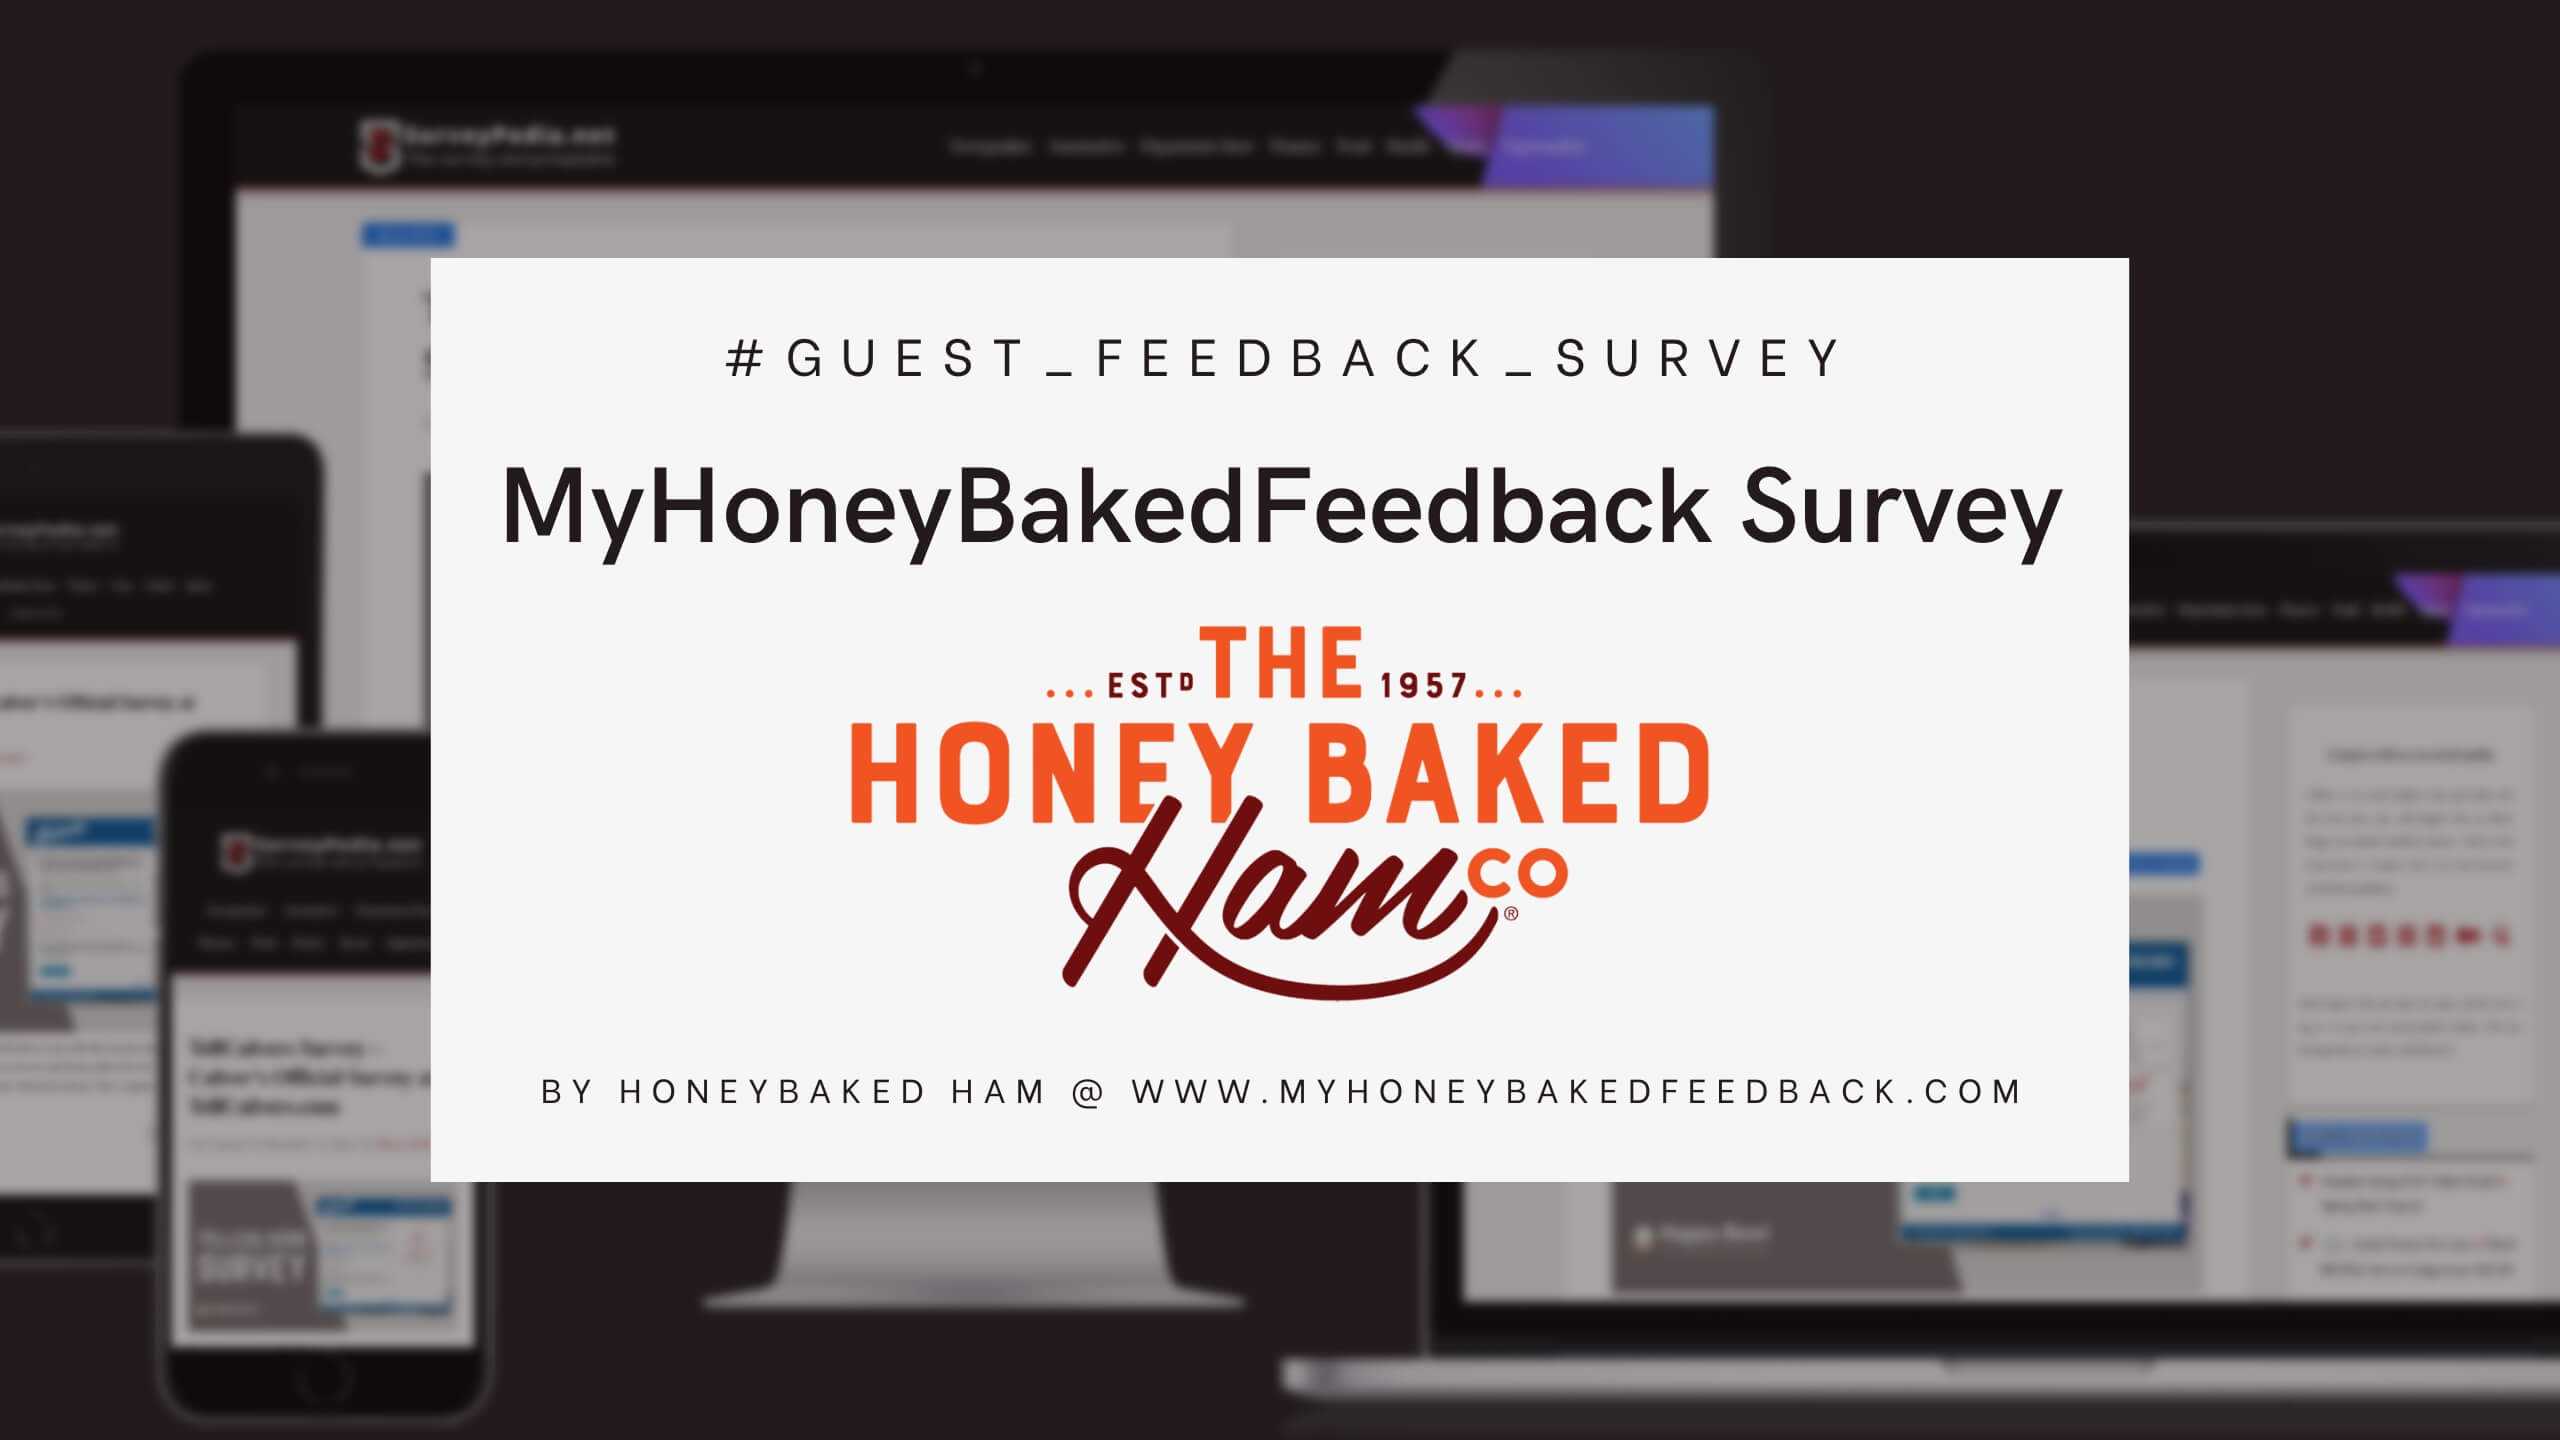 MyHoneyBakedFeedback Survey: HoneyBaked Ham Official Customer Feedback Survey at www.myhoneybakedfeedback.com